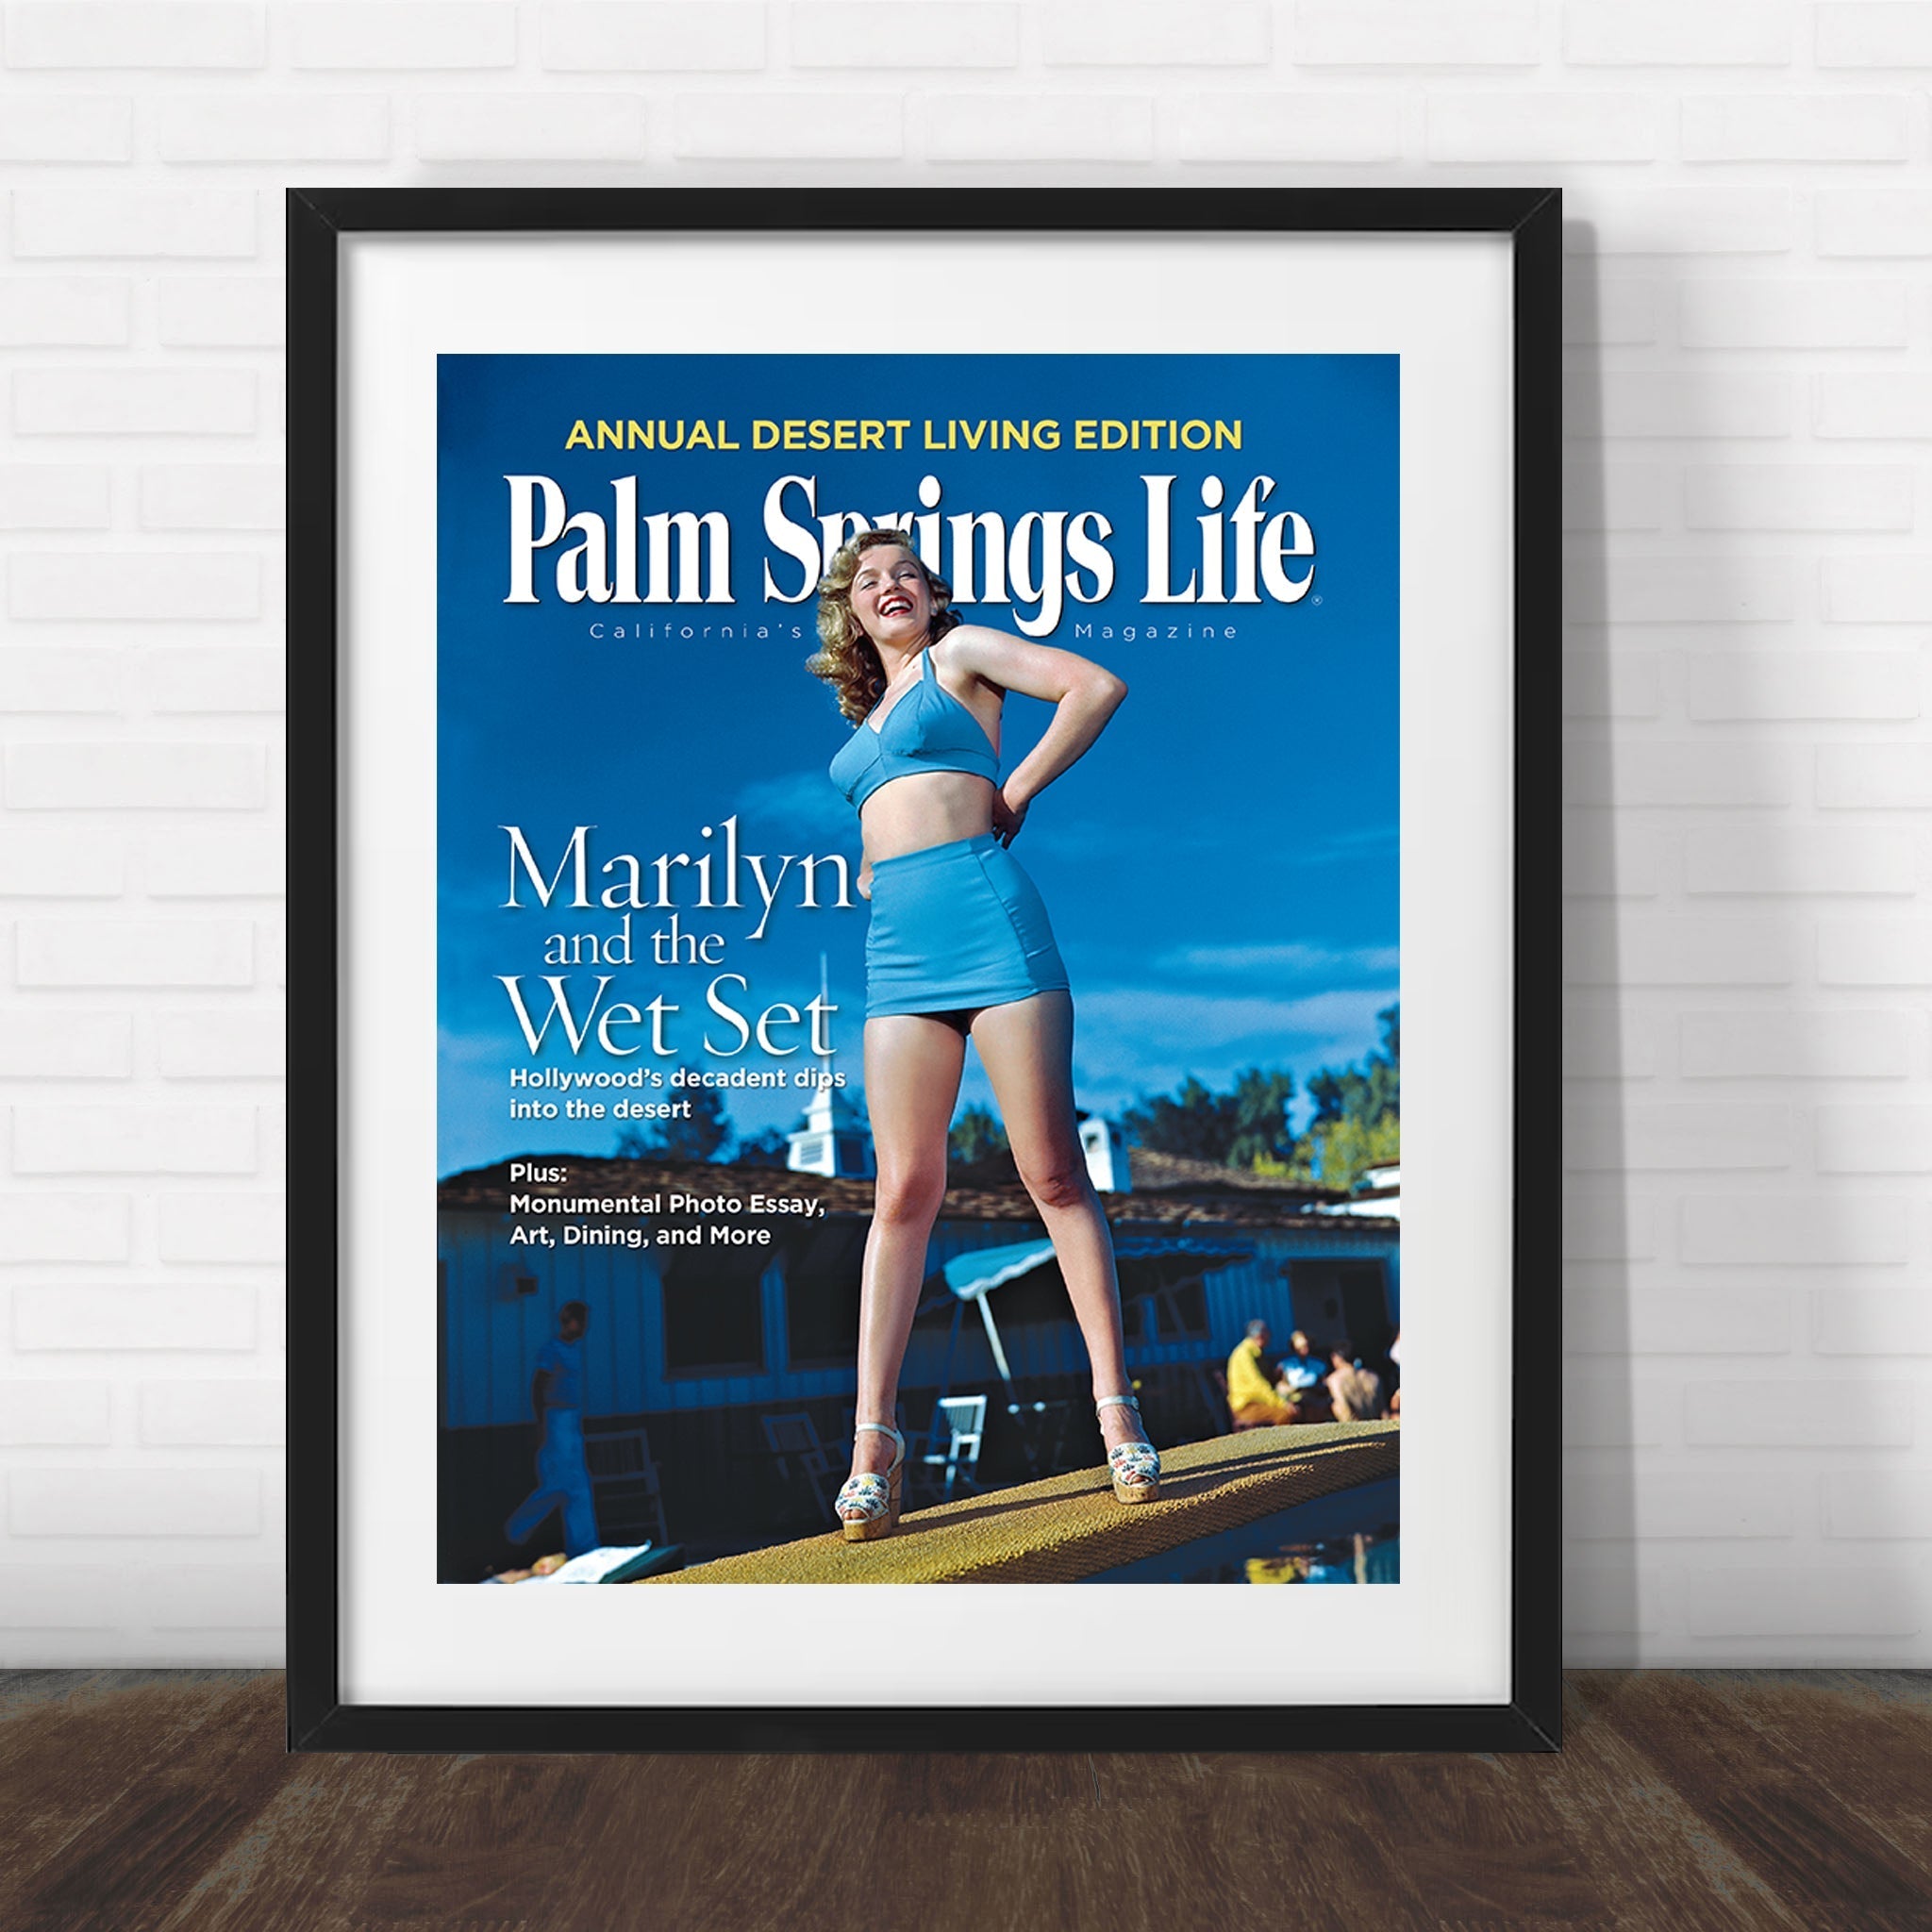 Palm Springs Life - September 2006 - Cover Poster